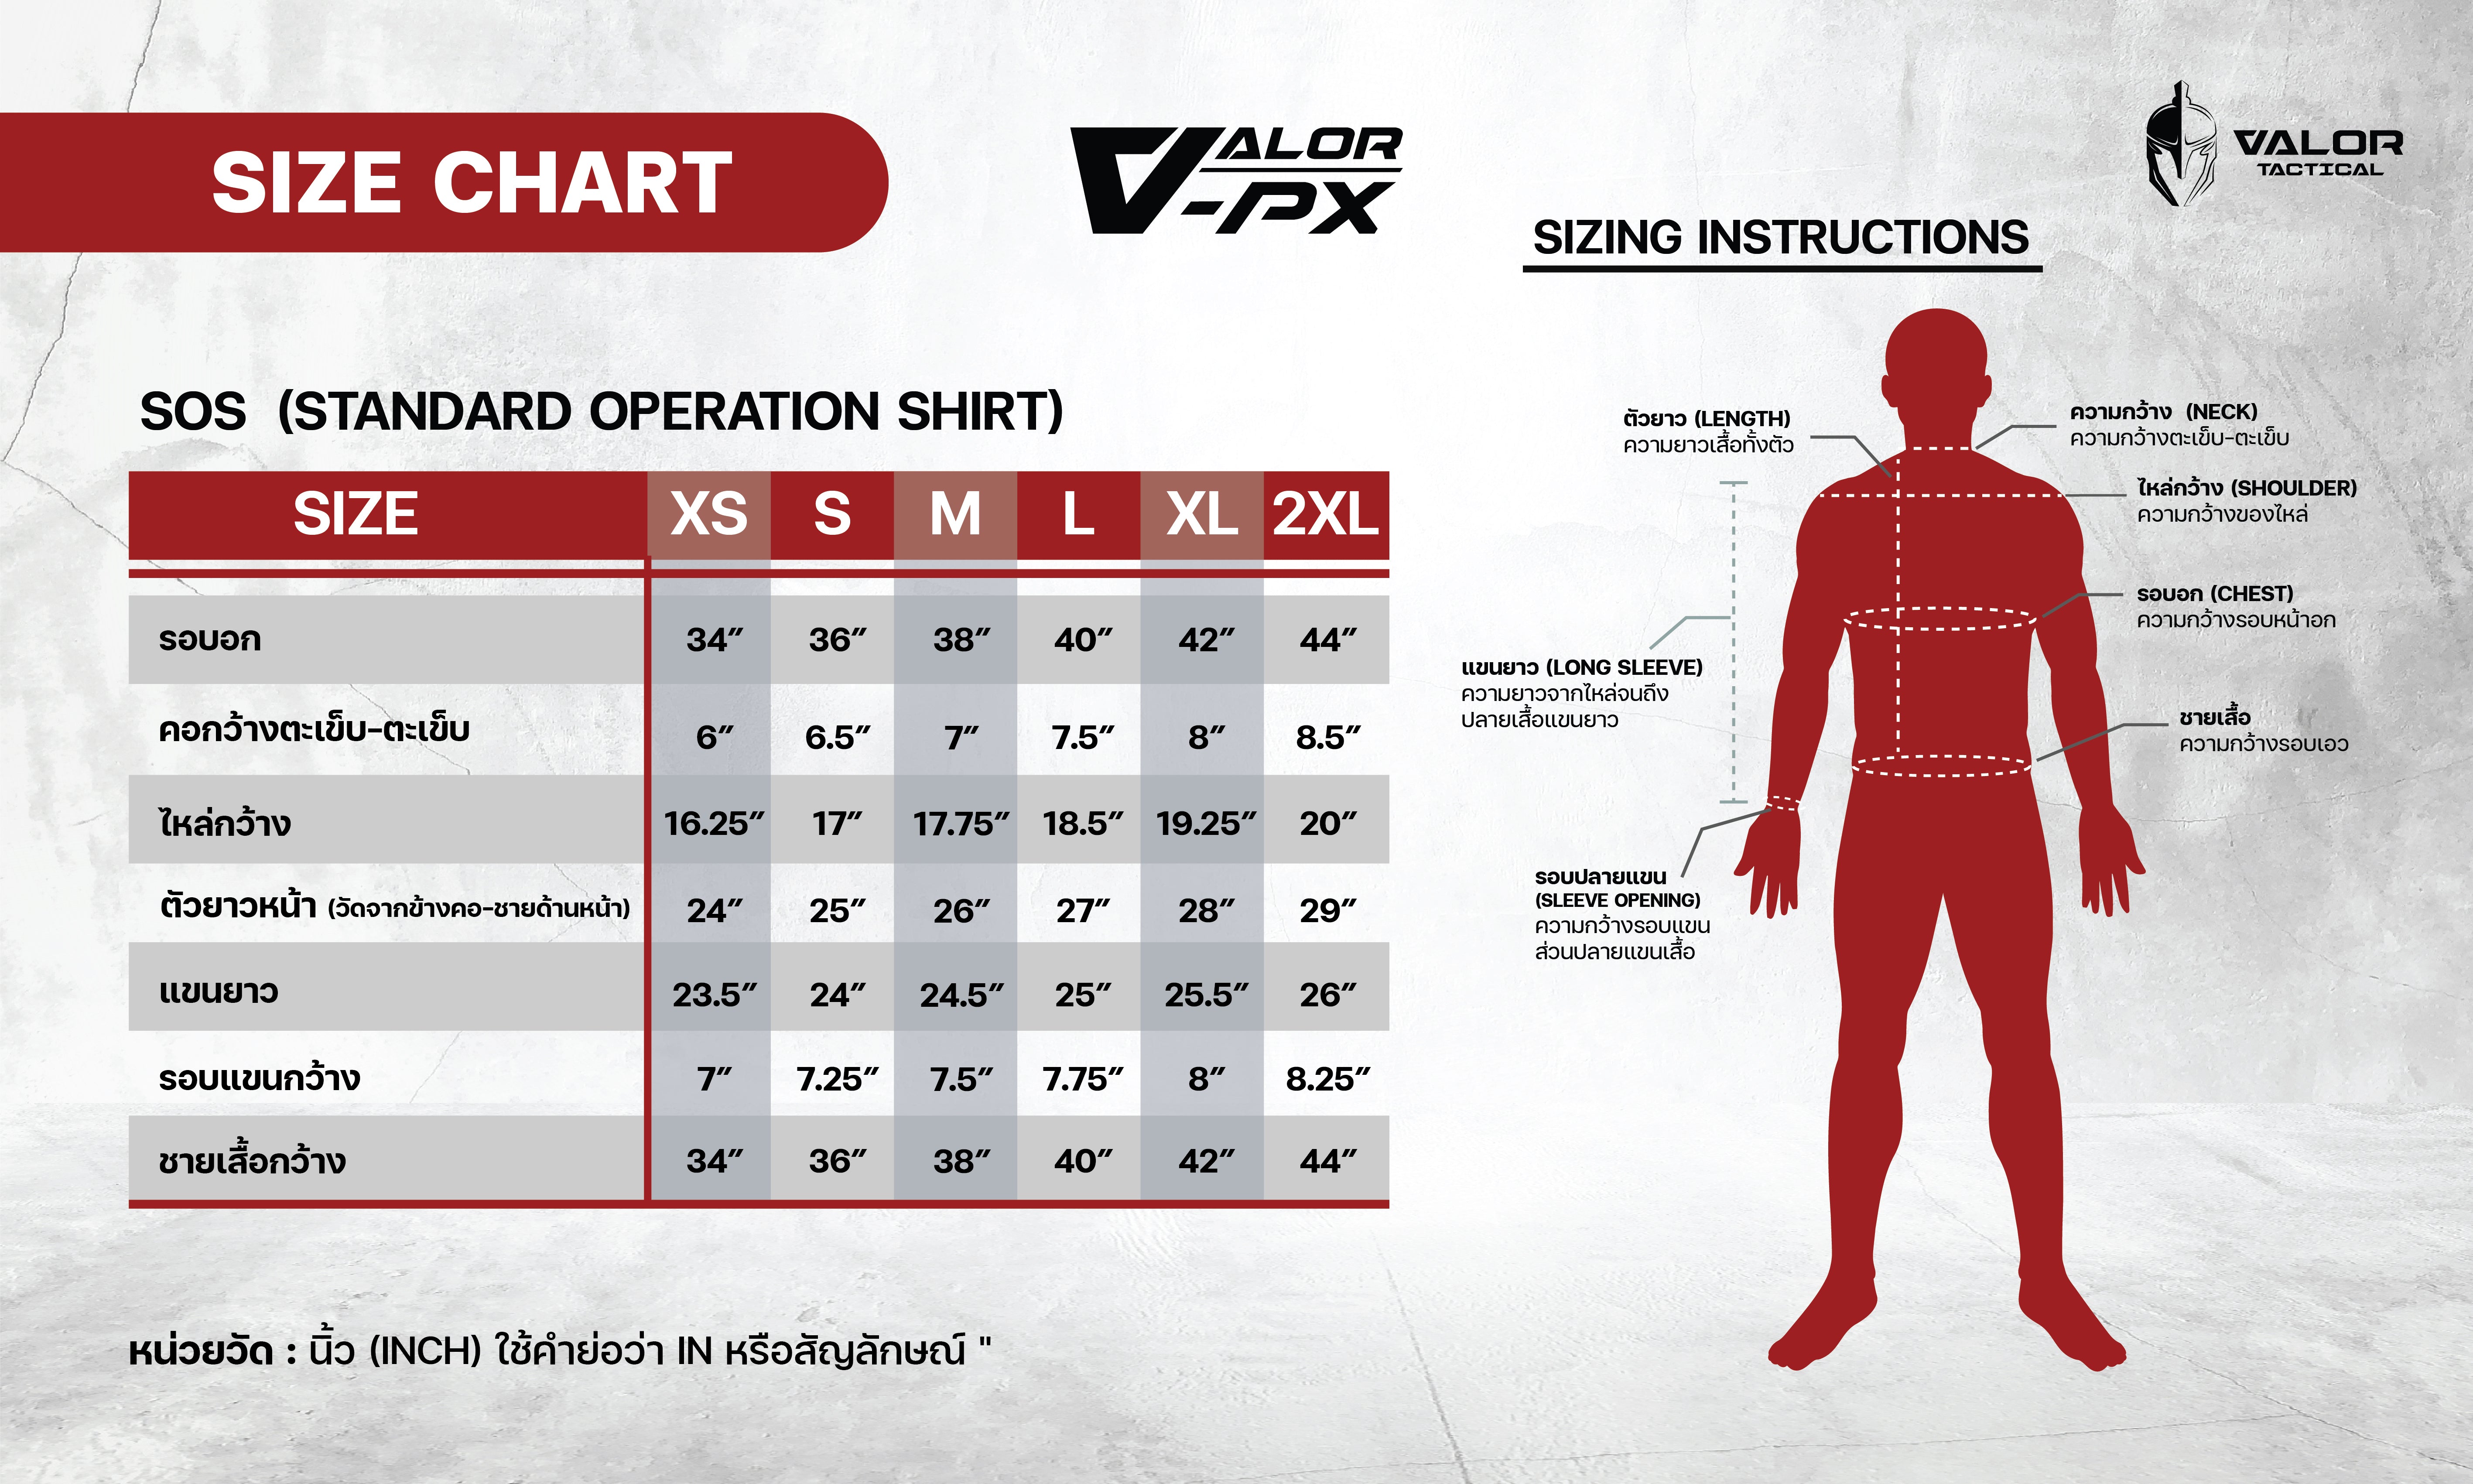 Valor PX Standard Operation Shirt, SOS (Black Tiger Stripes)